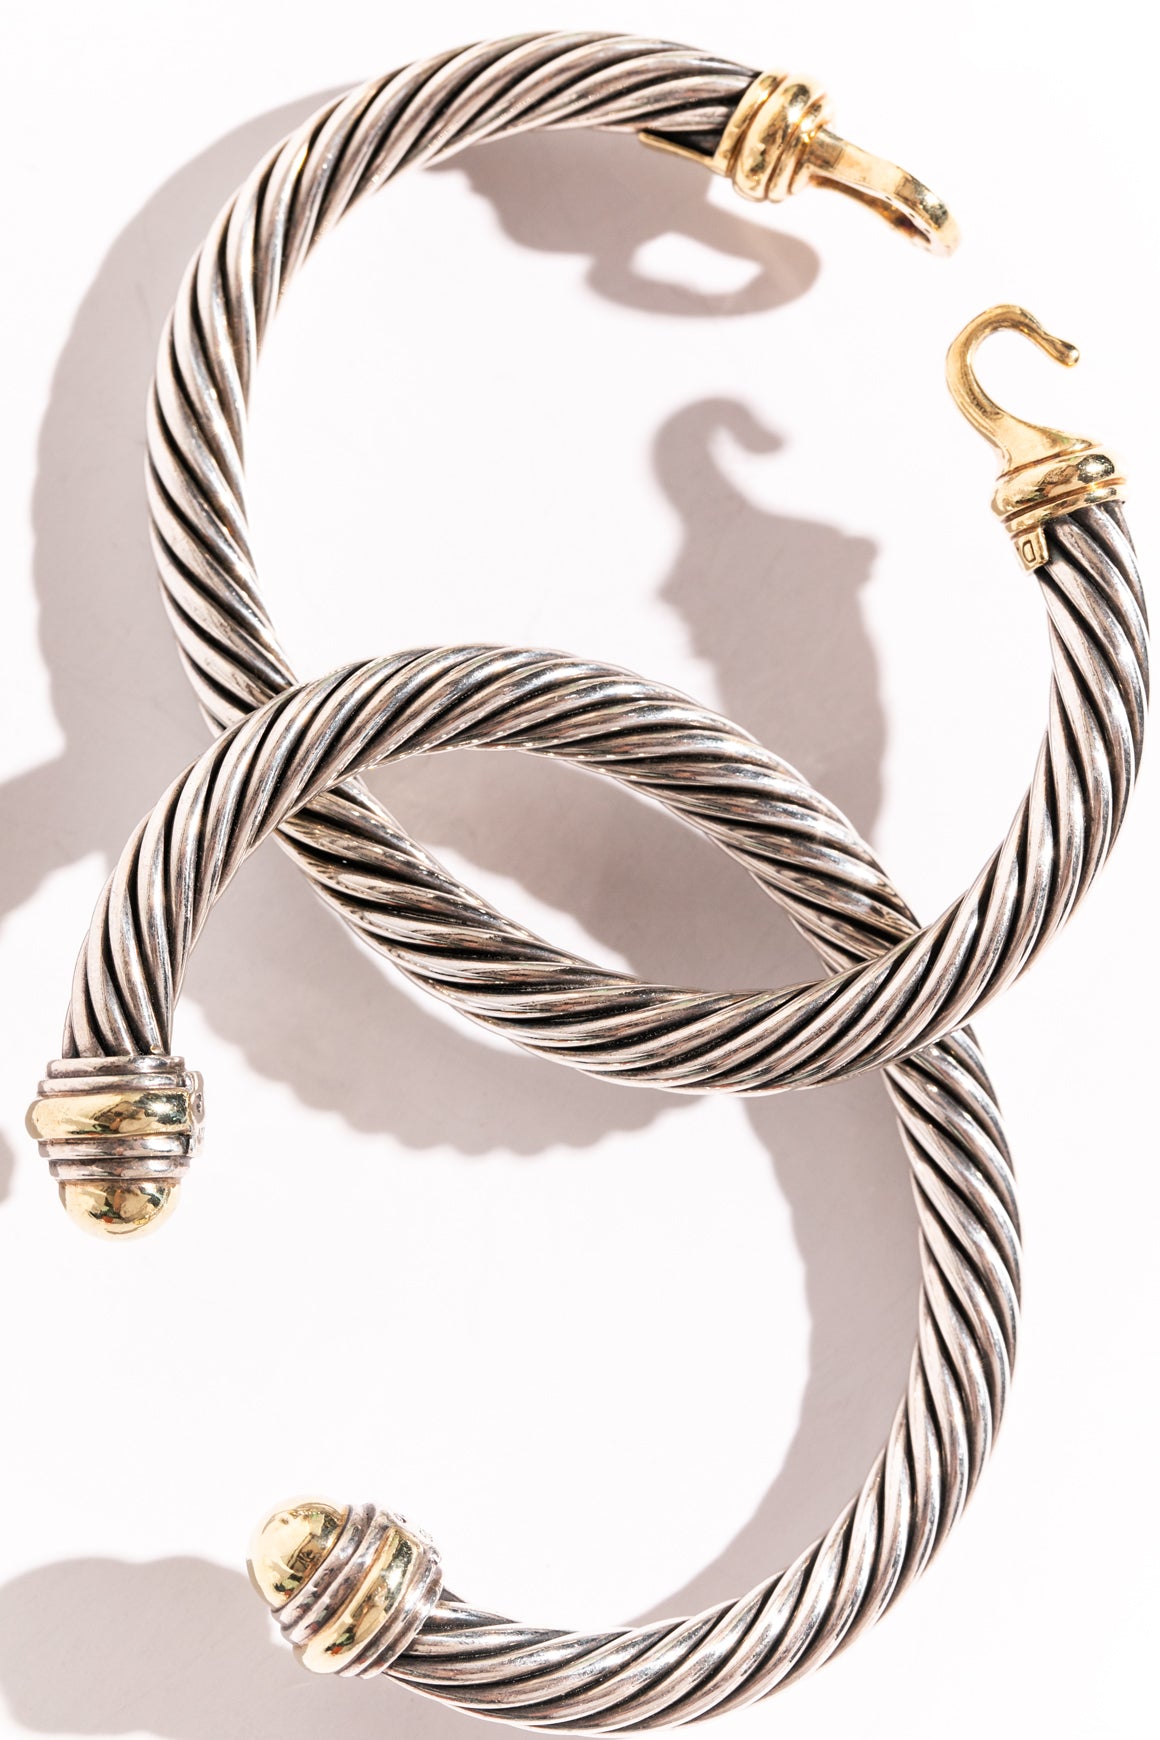 DAVID YURMAN Silver & Gold Cable Twist Bracelet